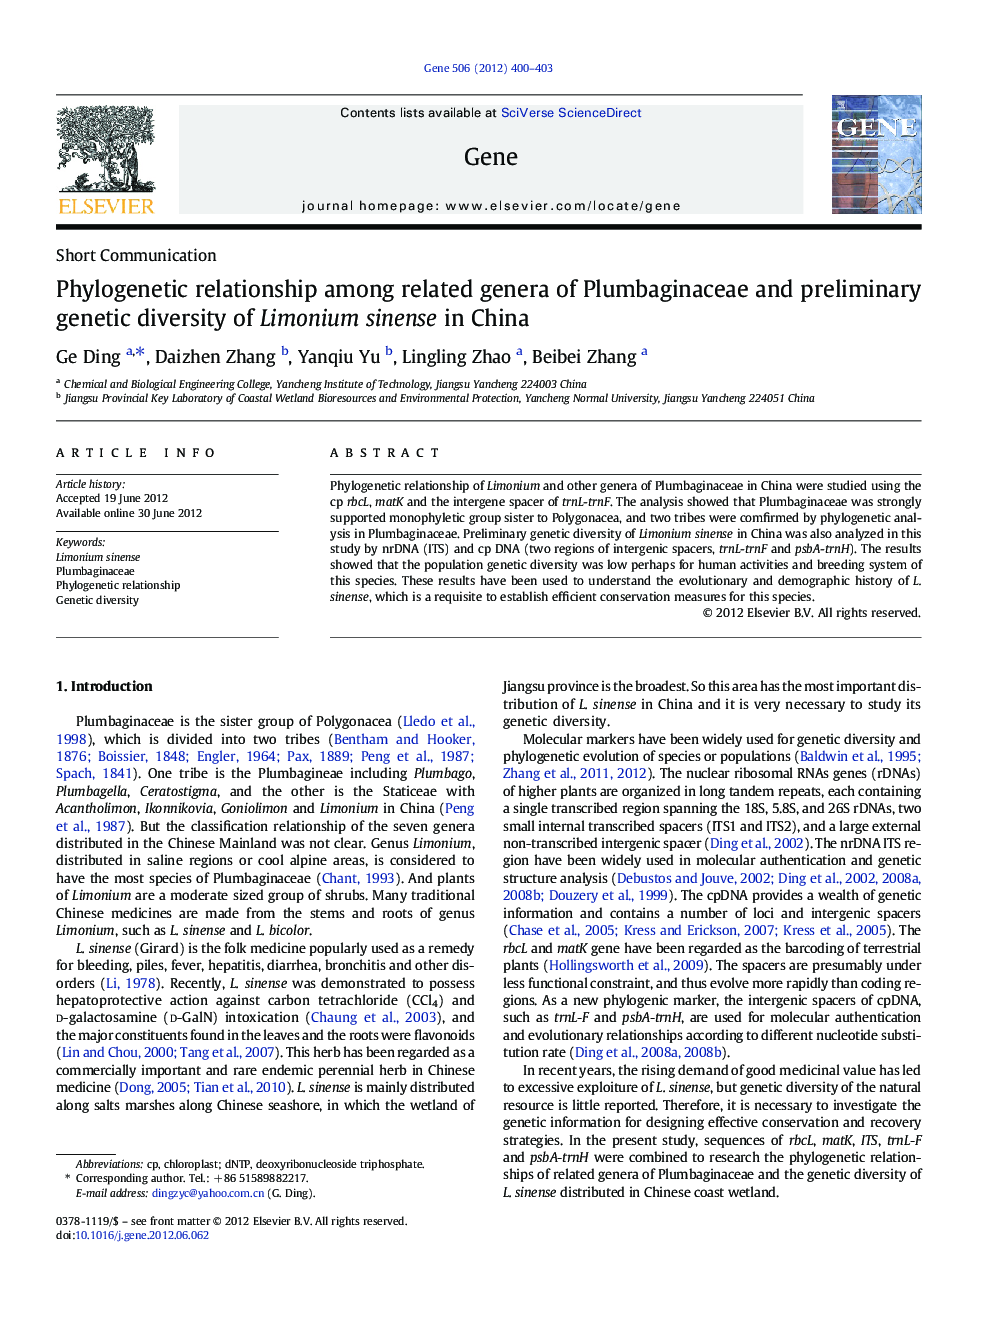 Phylogenetic relationship among related genera of Plumbaginaceae and preliminary genetic diversity of Limonium sinense in China